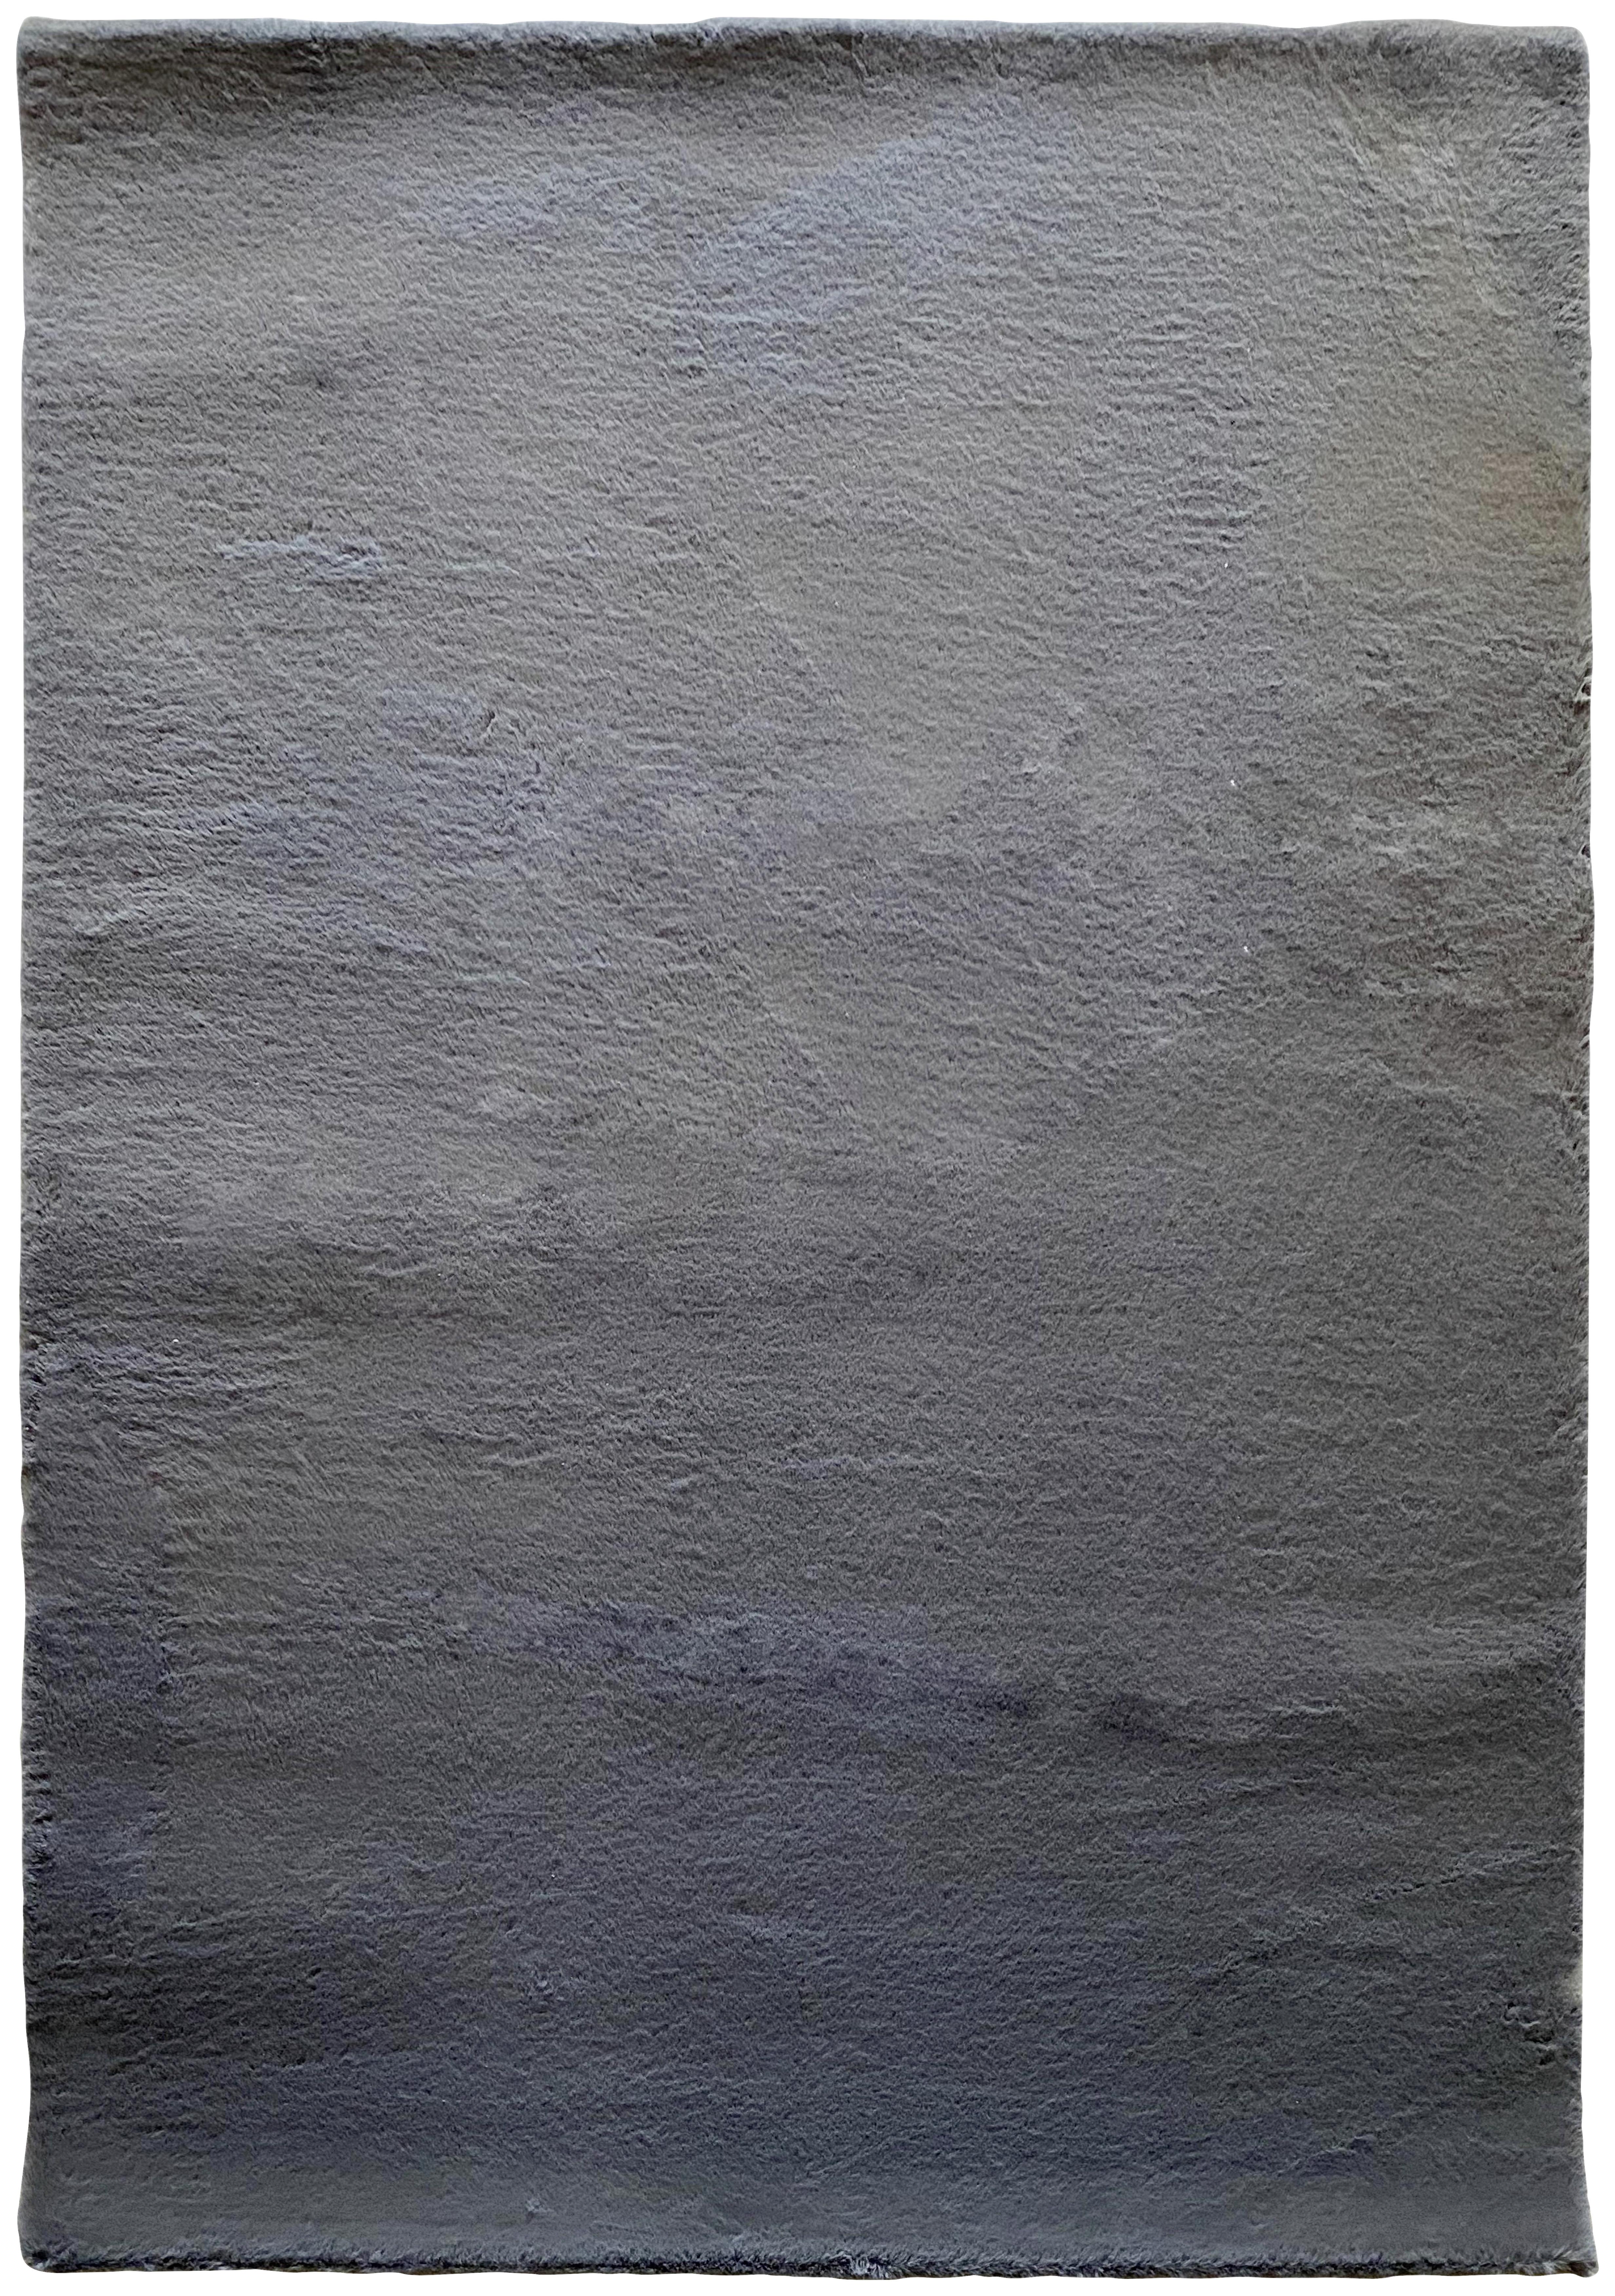 Fellteppich Margarete - Dunkelgrau, MODERN, Textil (160/220cm) - Luca Bessoni